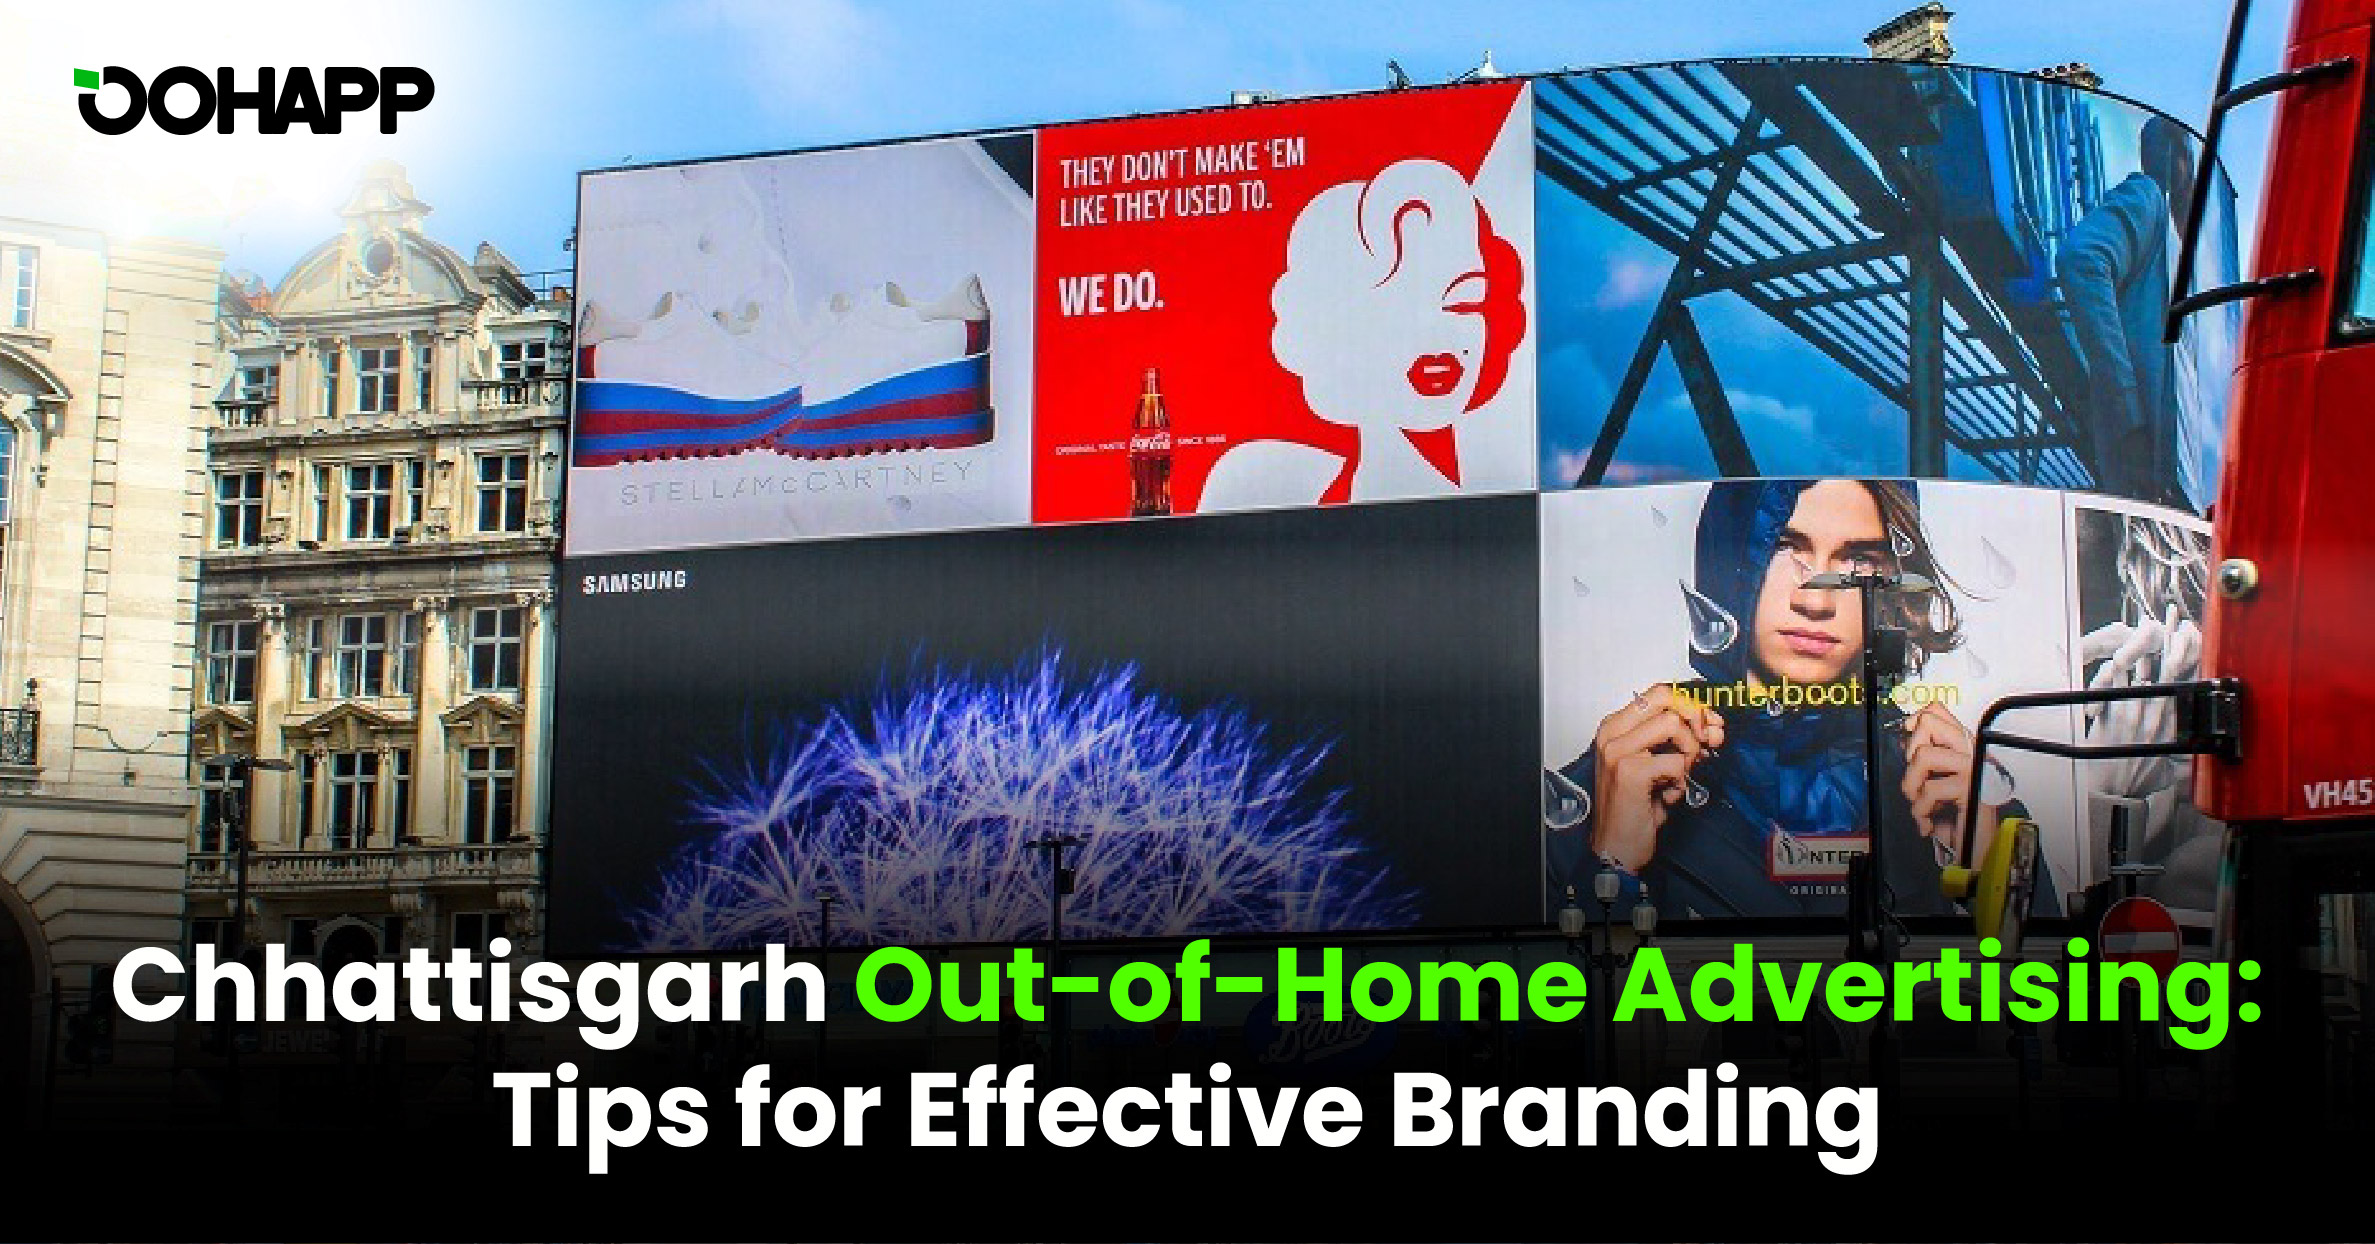 Chhattisgarh Out-of-Home Advertising: Tips for Effective Branding